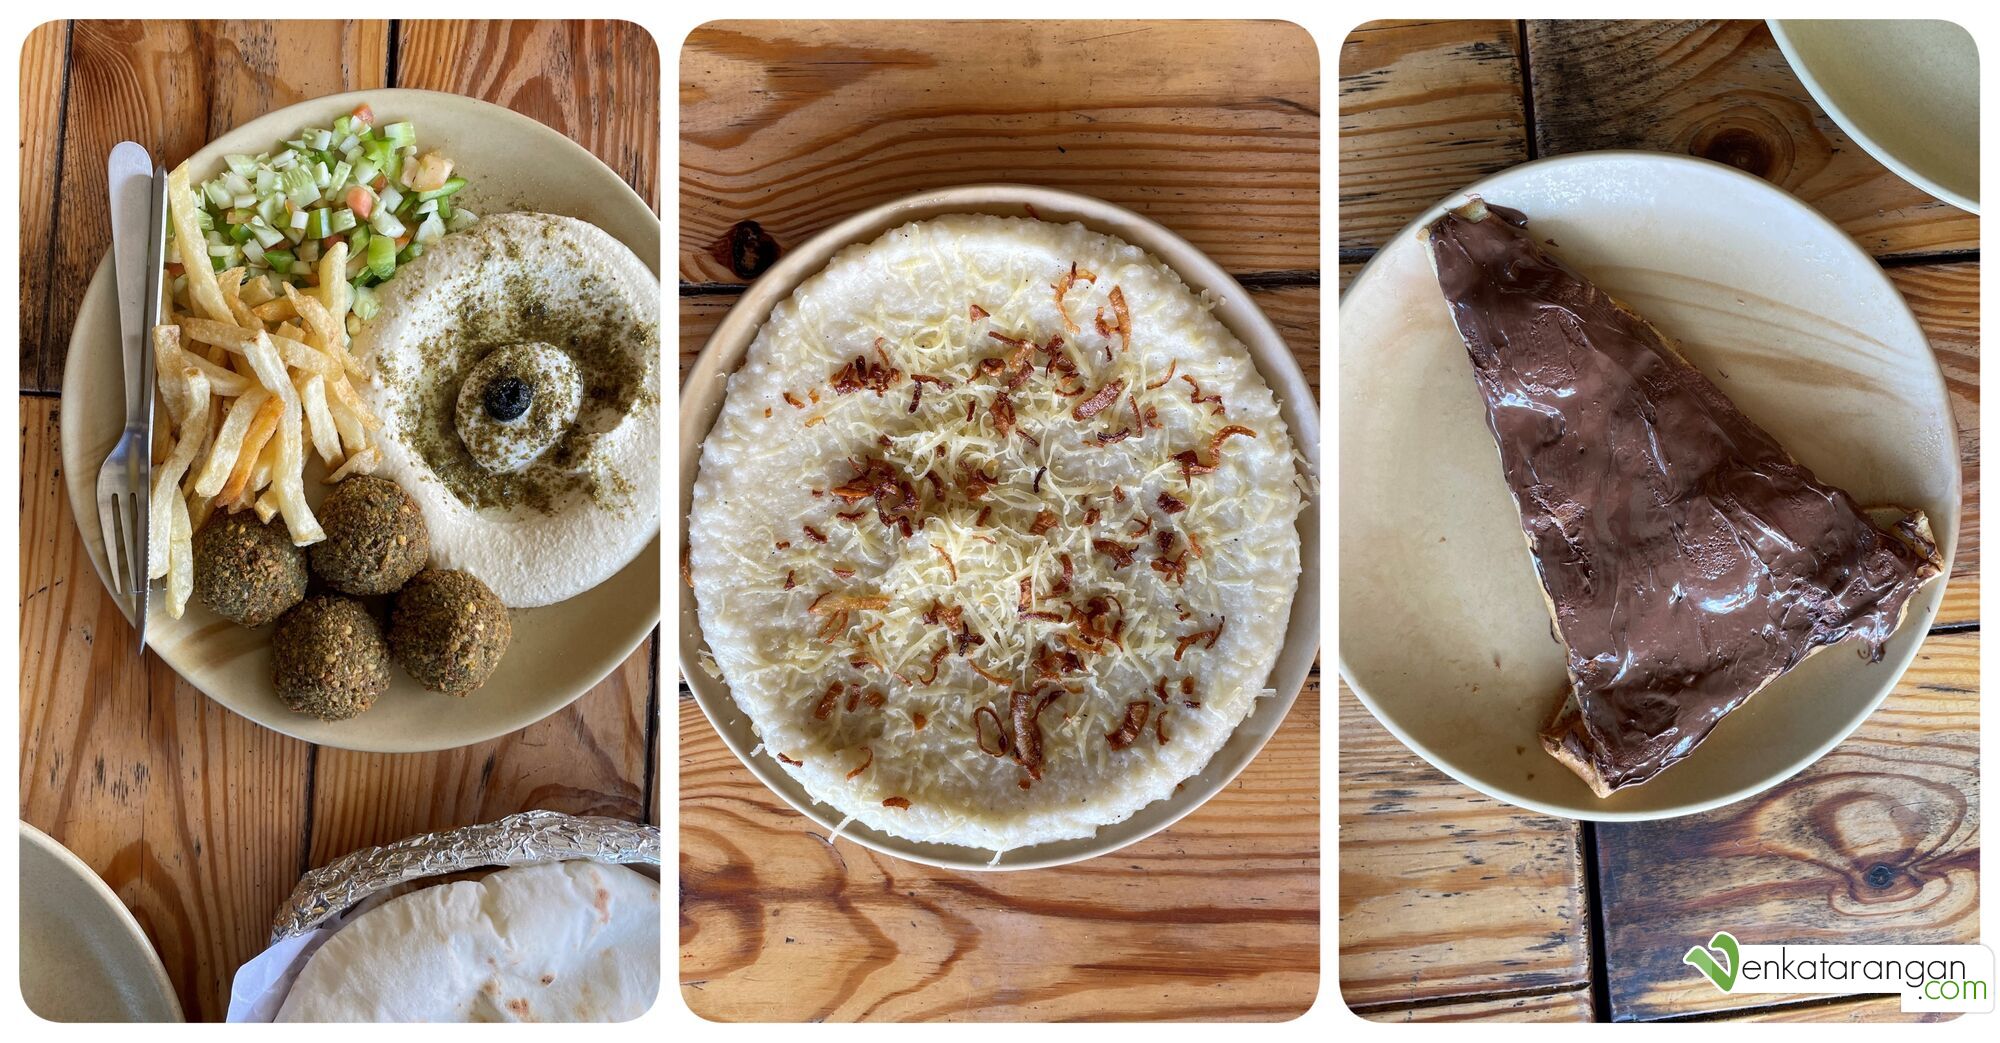 Hummus, Veg Falafel and Pita Bread; Mashed Potatoes and Nutella banana pancake